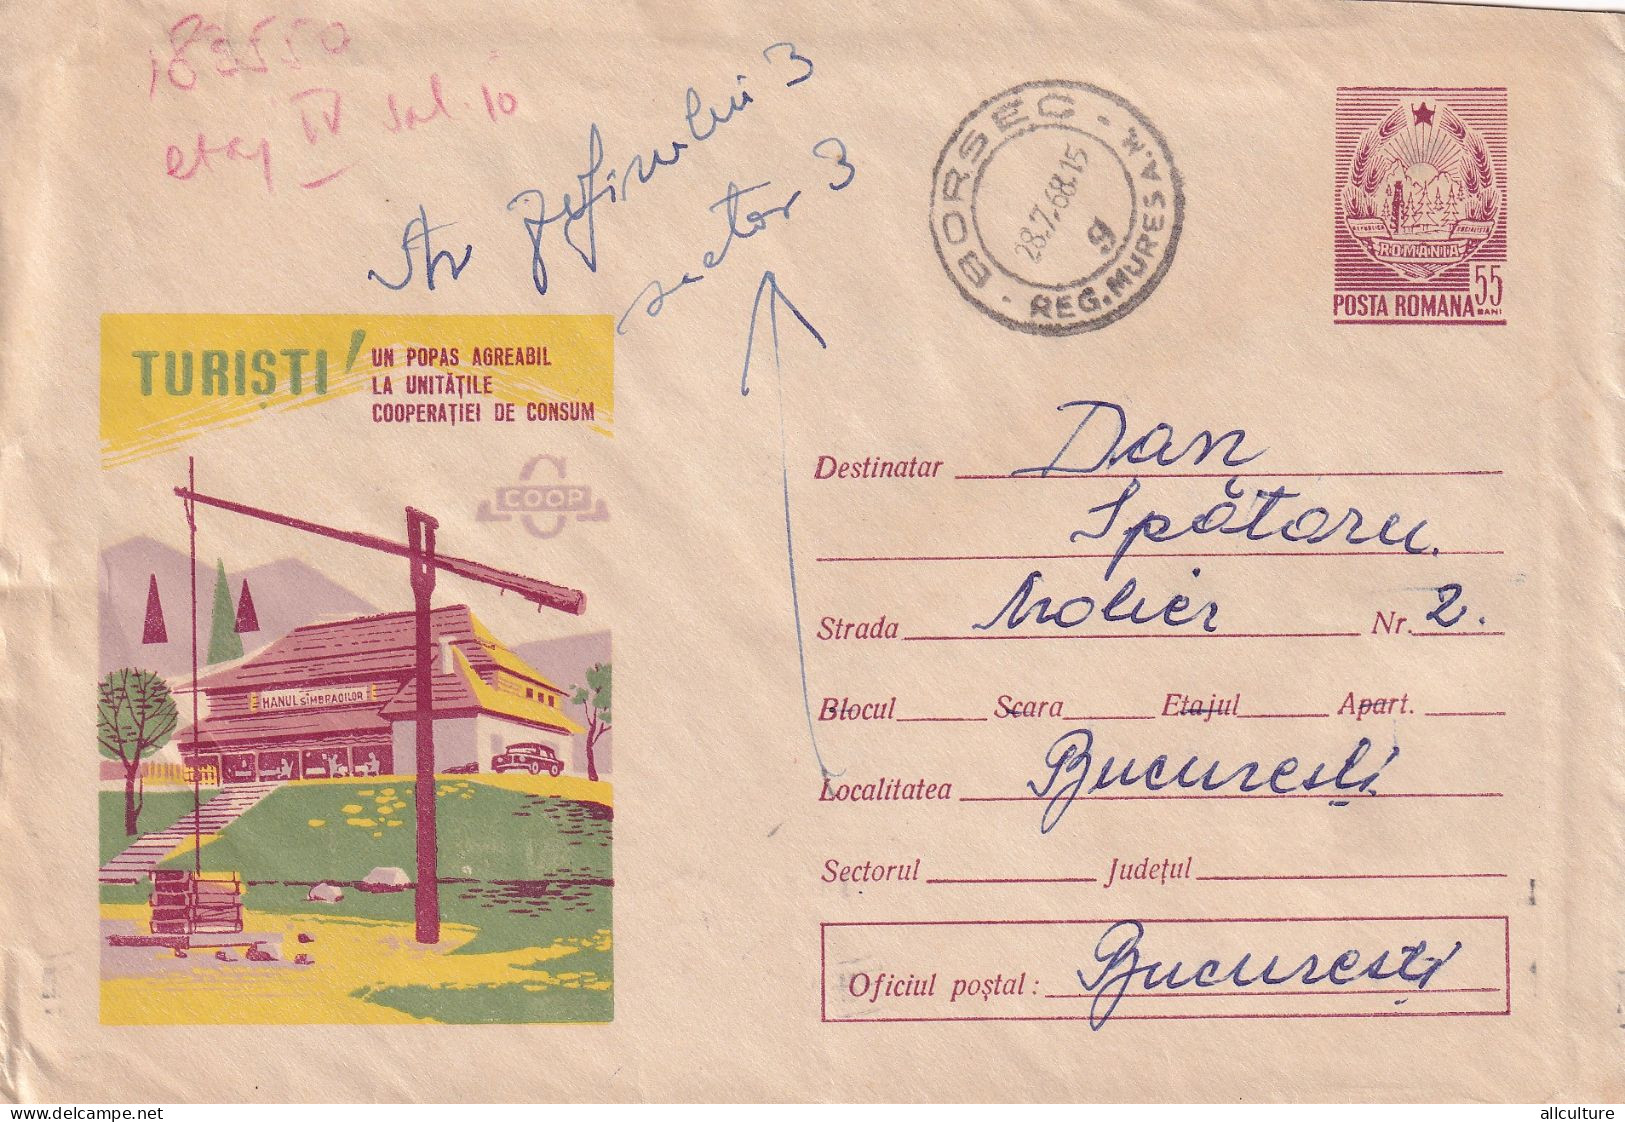 A24558 -  TURIST COOP SAMBRAOILOR HAN Letter Inside  Cover Stationery Romania 1968 - Interi Postali